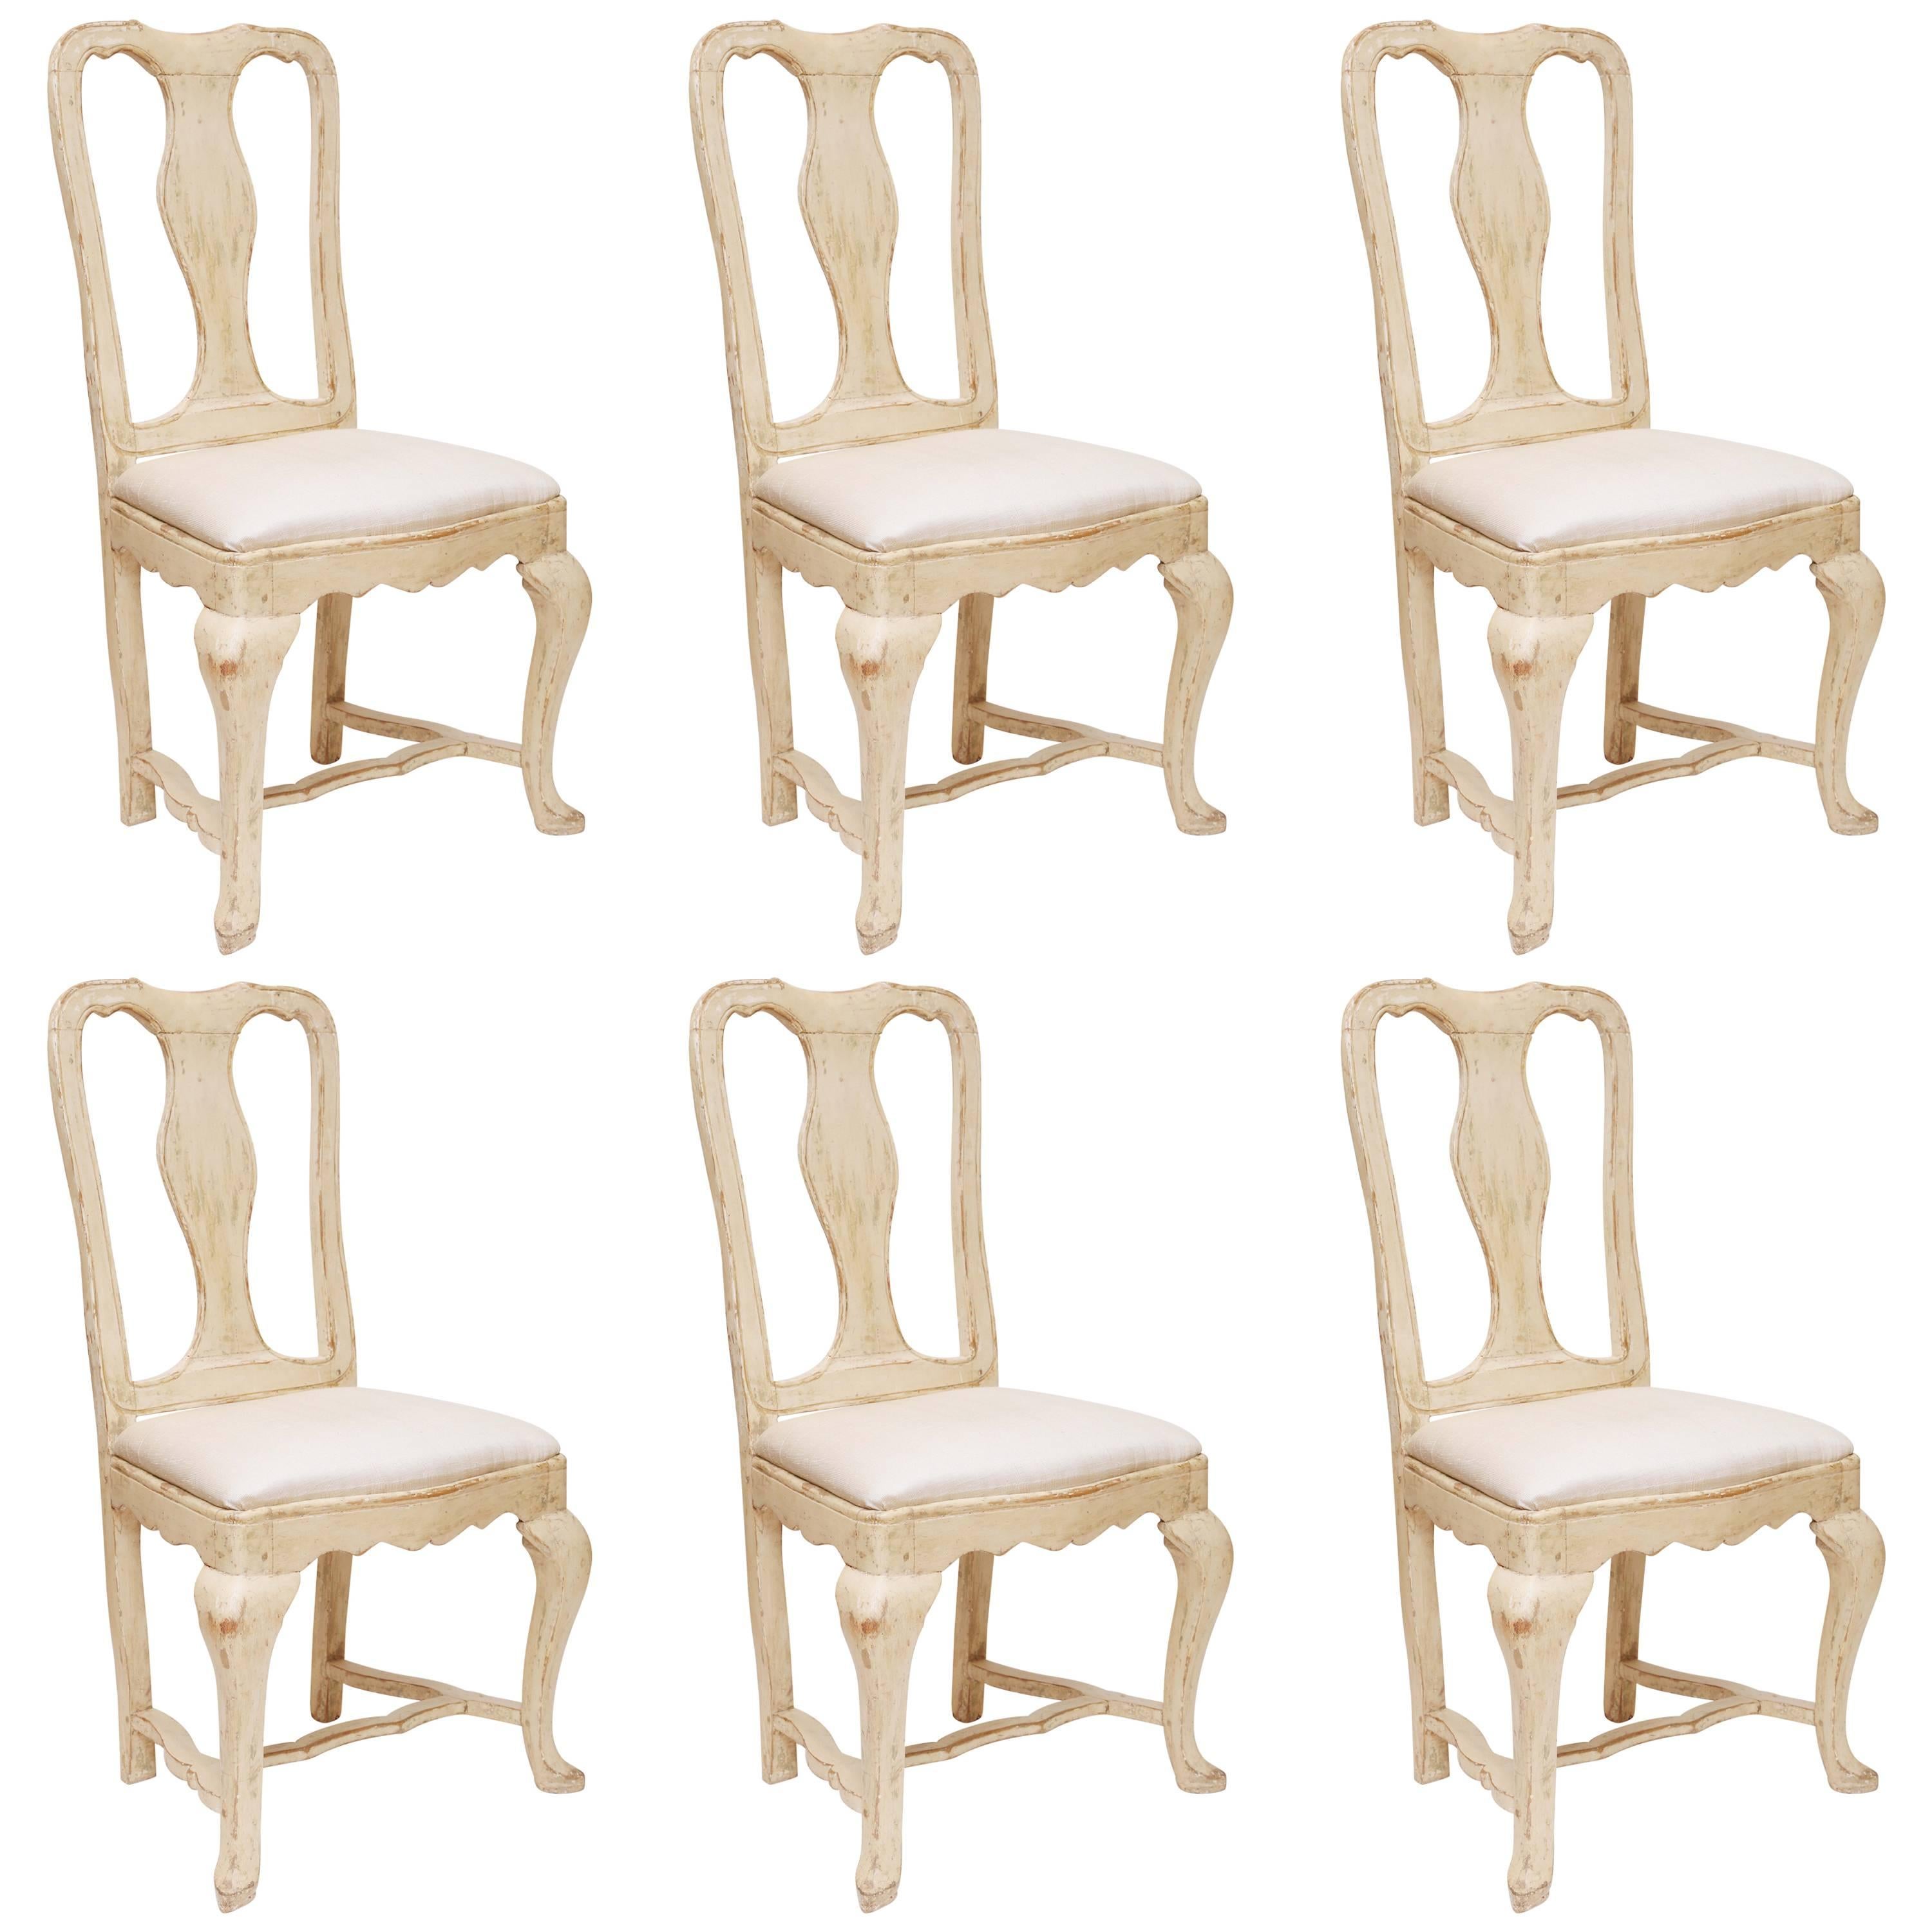 Set of Six Swedish Gustavian Period Dining Chairs